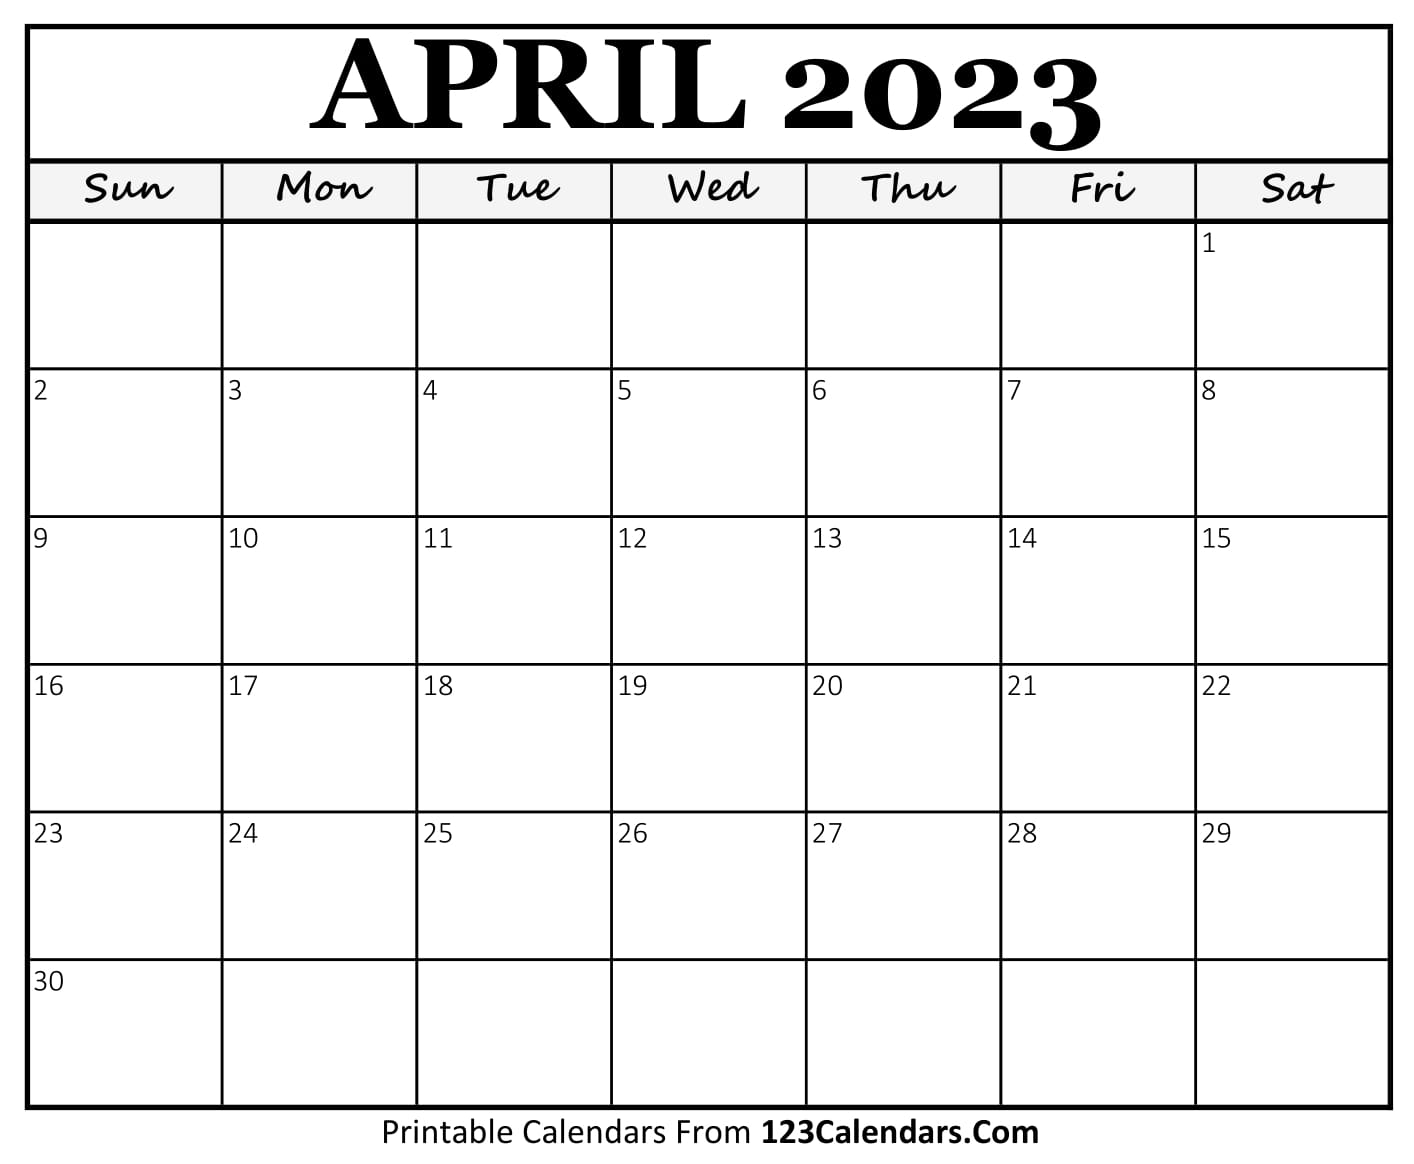 april-2023-calendar-123calendars-get-latest-map-update